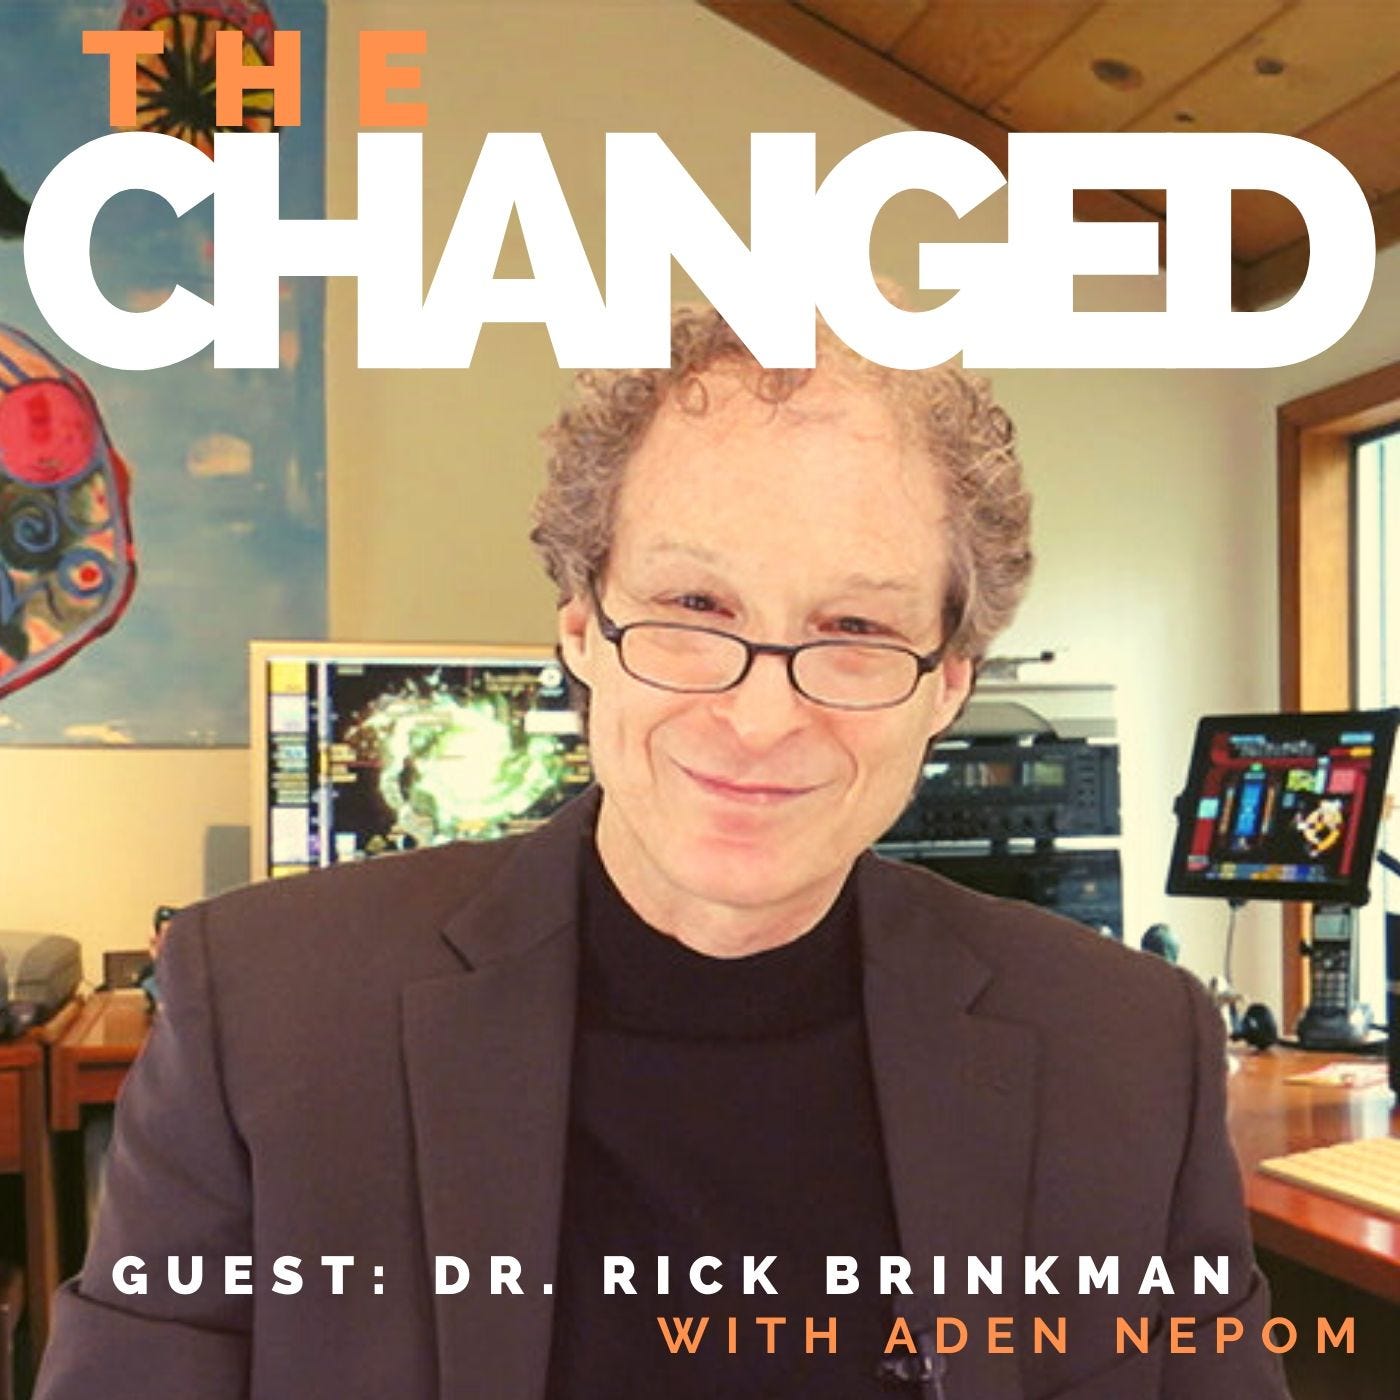 Best selling author, motivational speaker and AANP President, Dr. Rick Brinkman